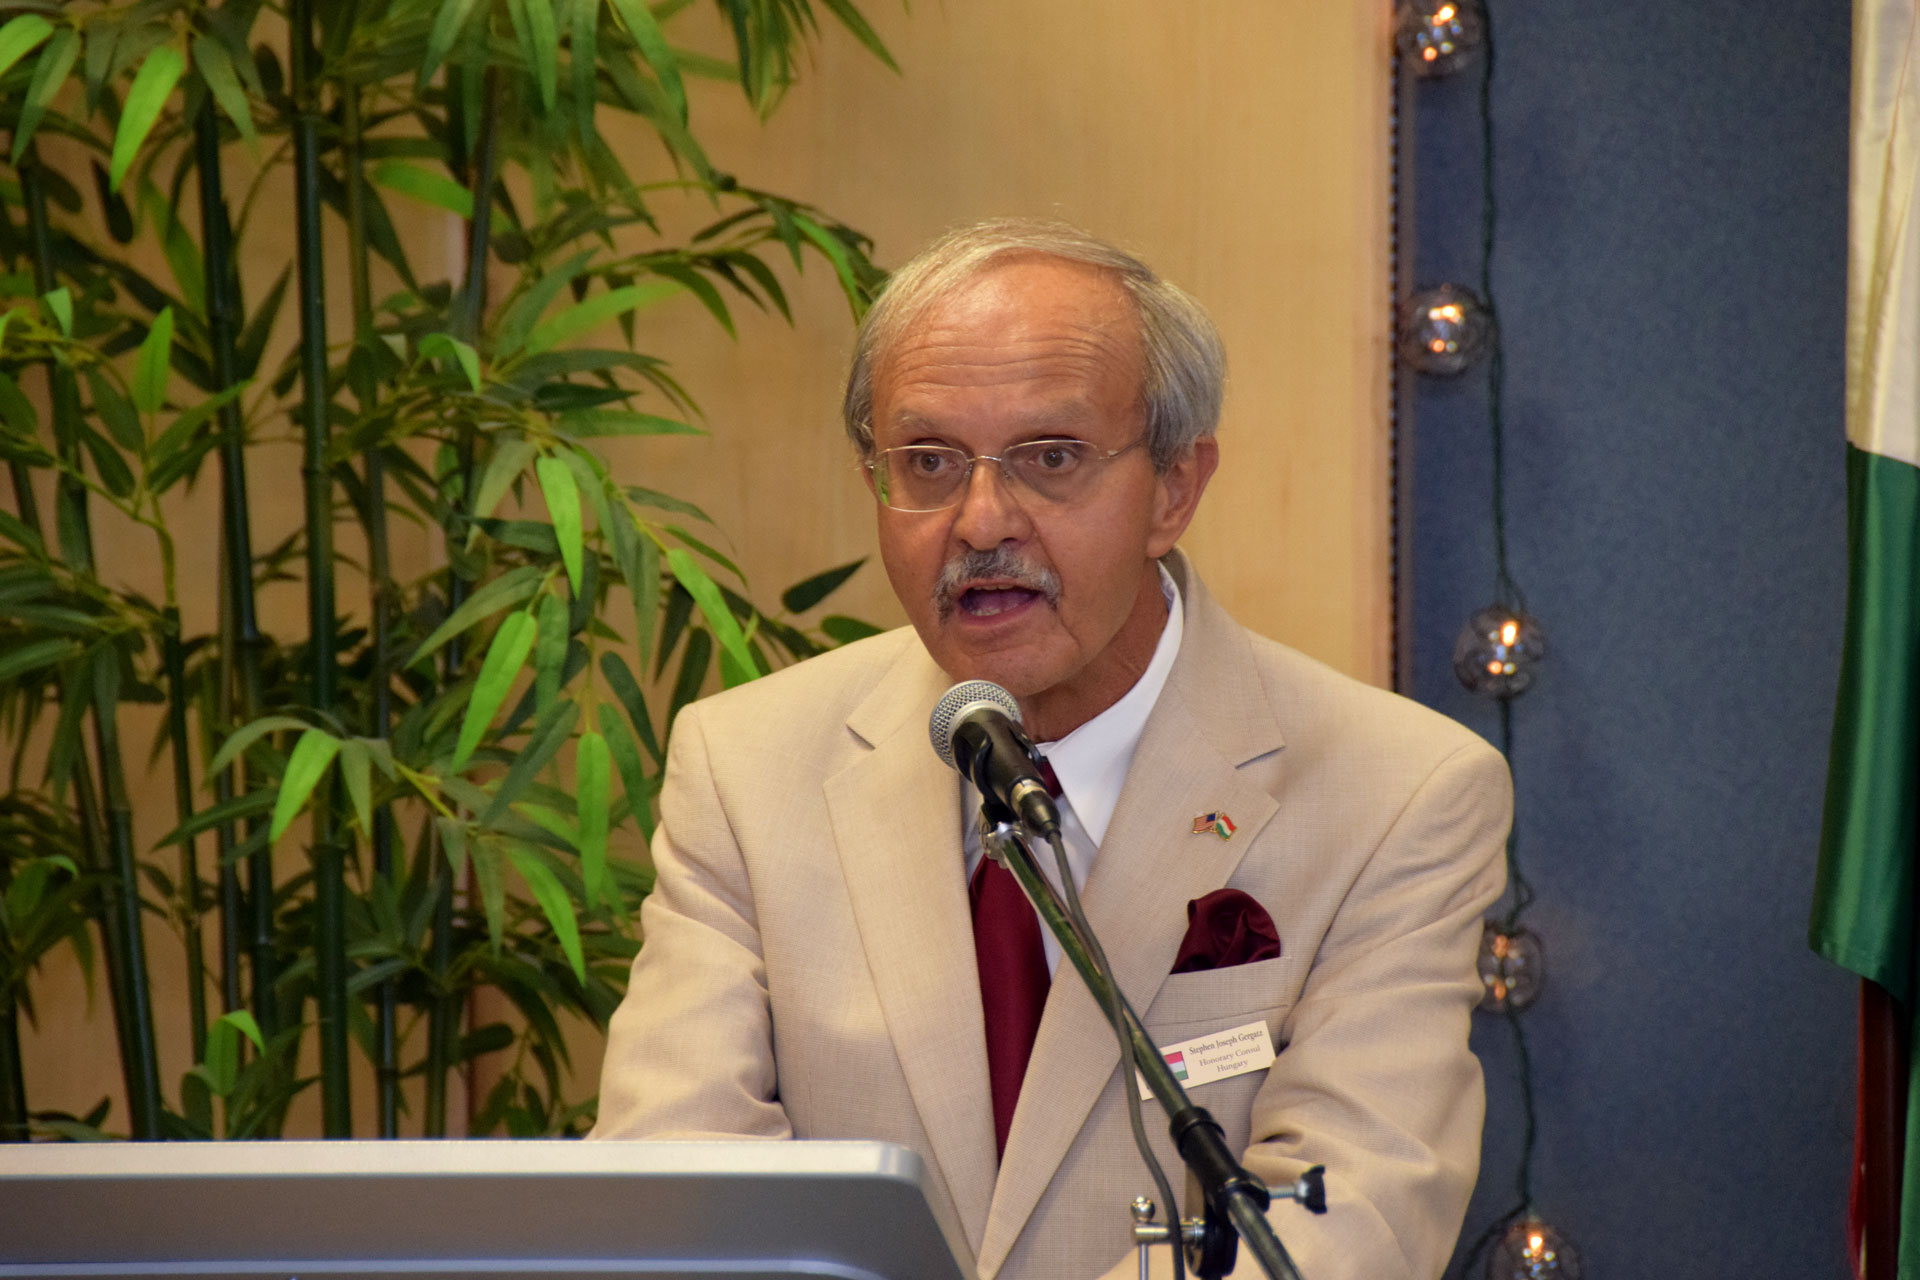 Mr. Stephen Joseph Gergatz, Honorary Consul of Sarasota, FL